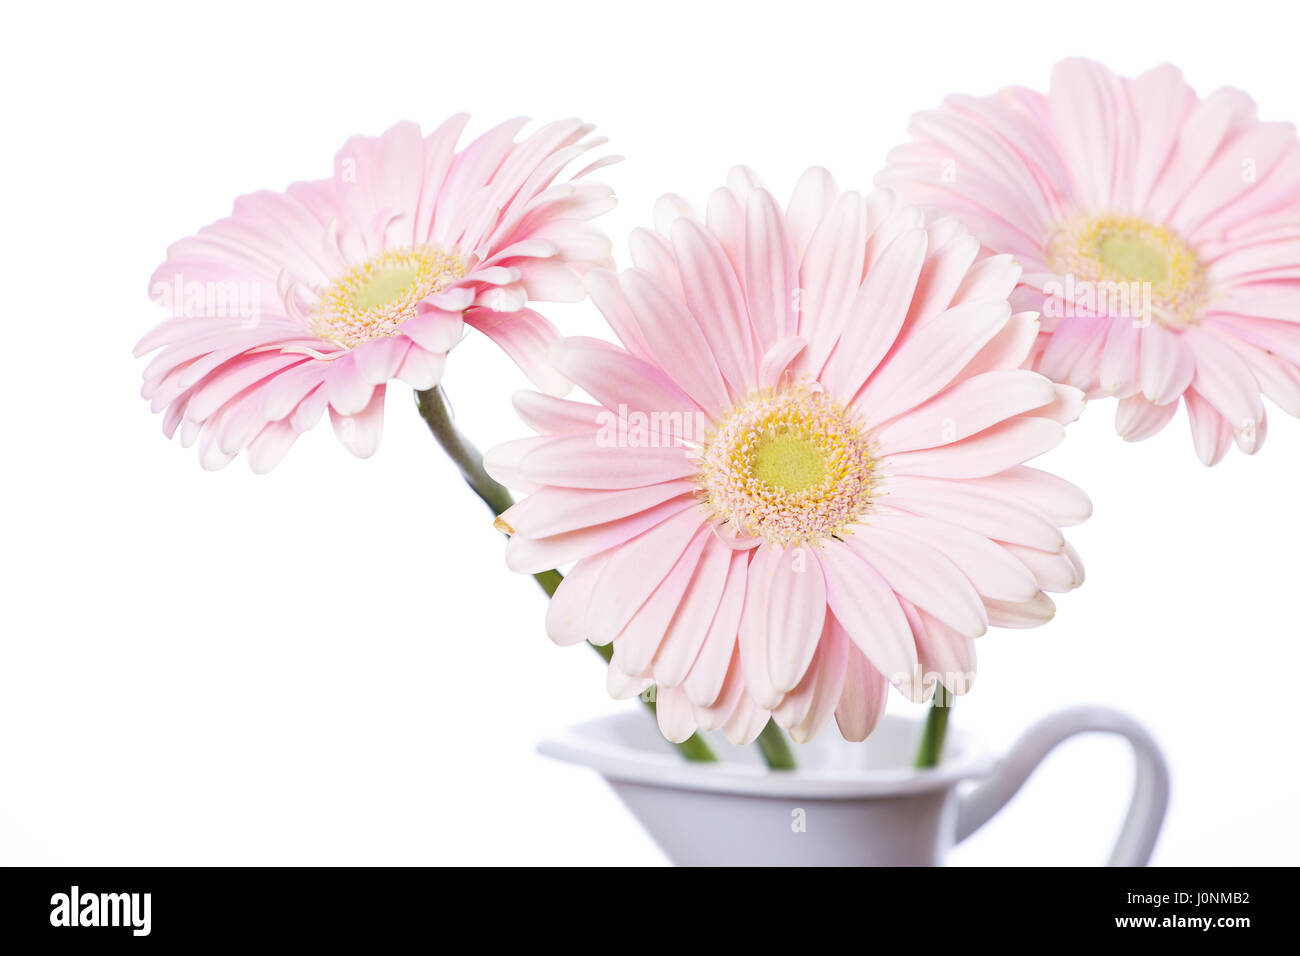 Perfect fresh Gerbera pink daisy flower on white background Stock Photo